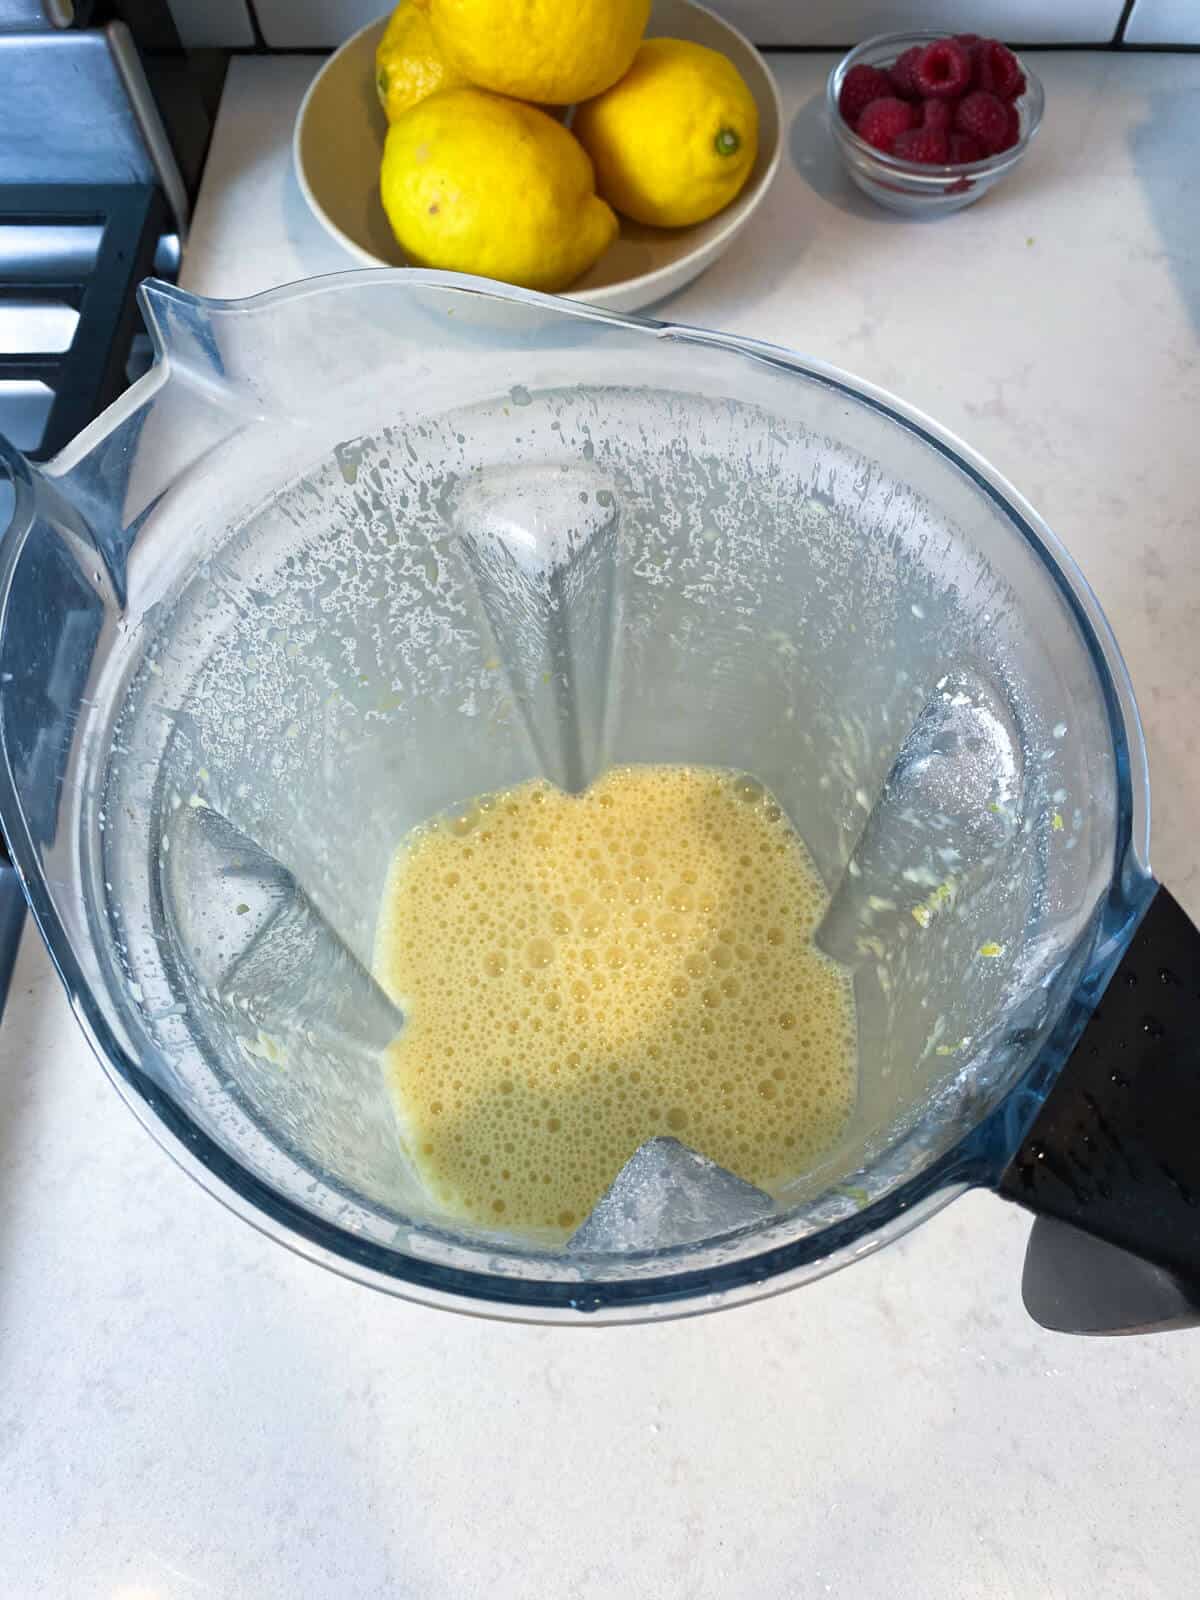 Blend the Dutch pancake batter in a blender.